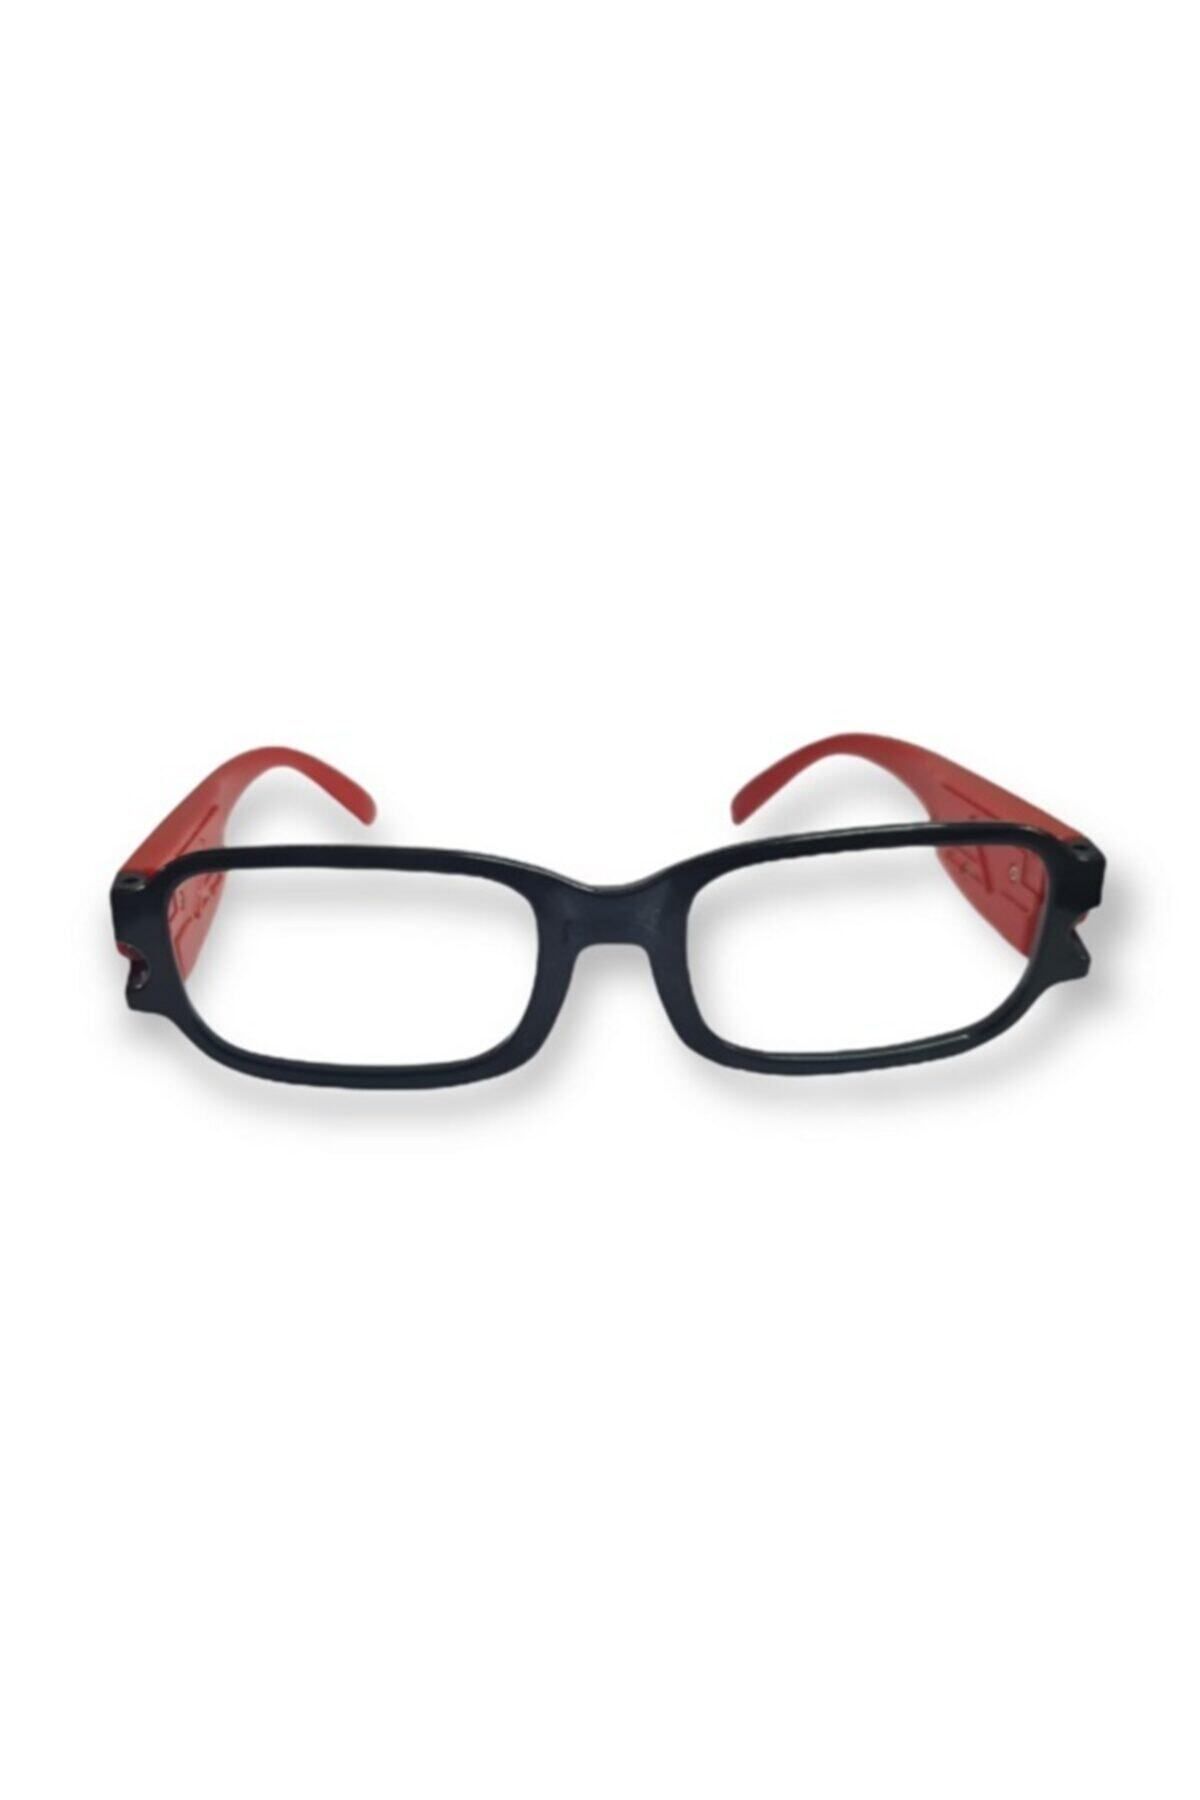 KUZEY HIRDAVAT Kitap Okuma Gözlüğü Led Işıklı Kitap Okuma Gözlüğü Kitap Okuma Gözlüğü Siyah-kırmızı